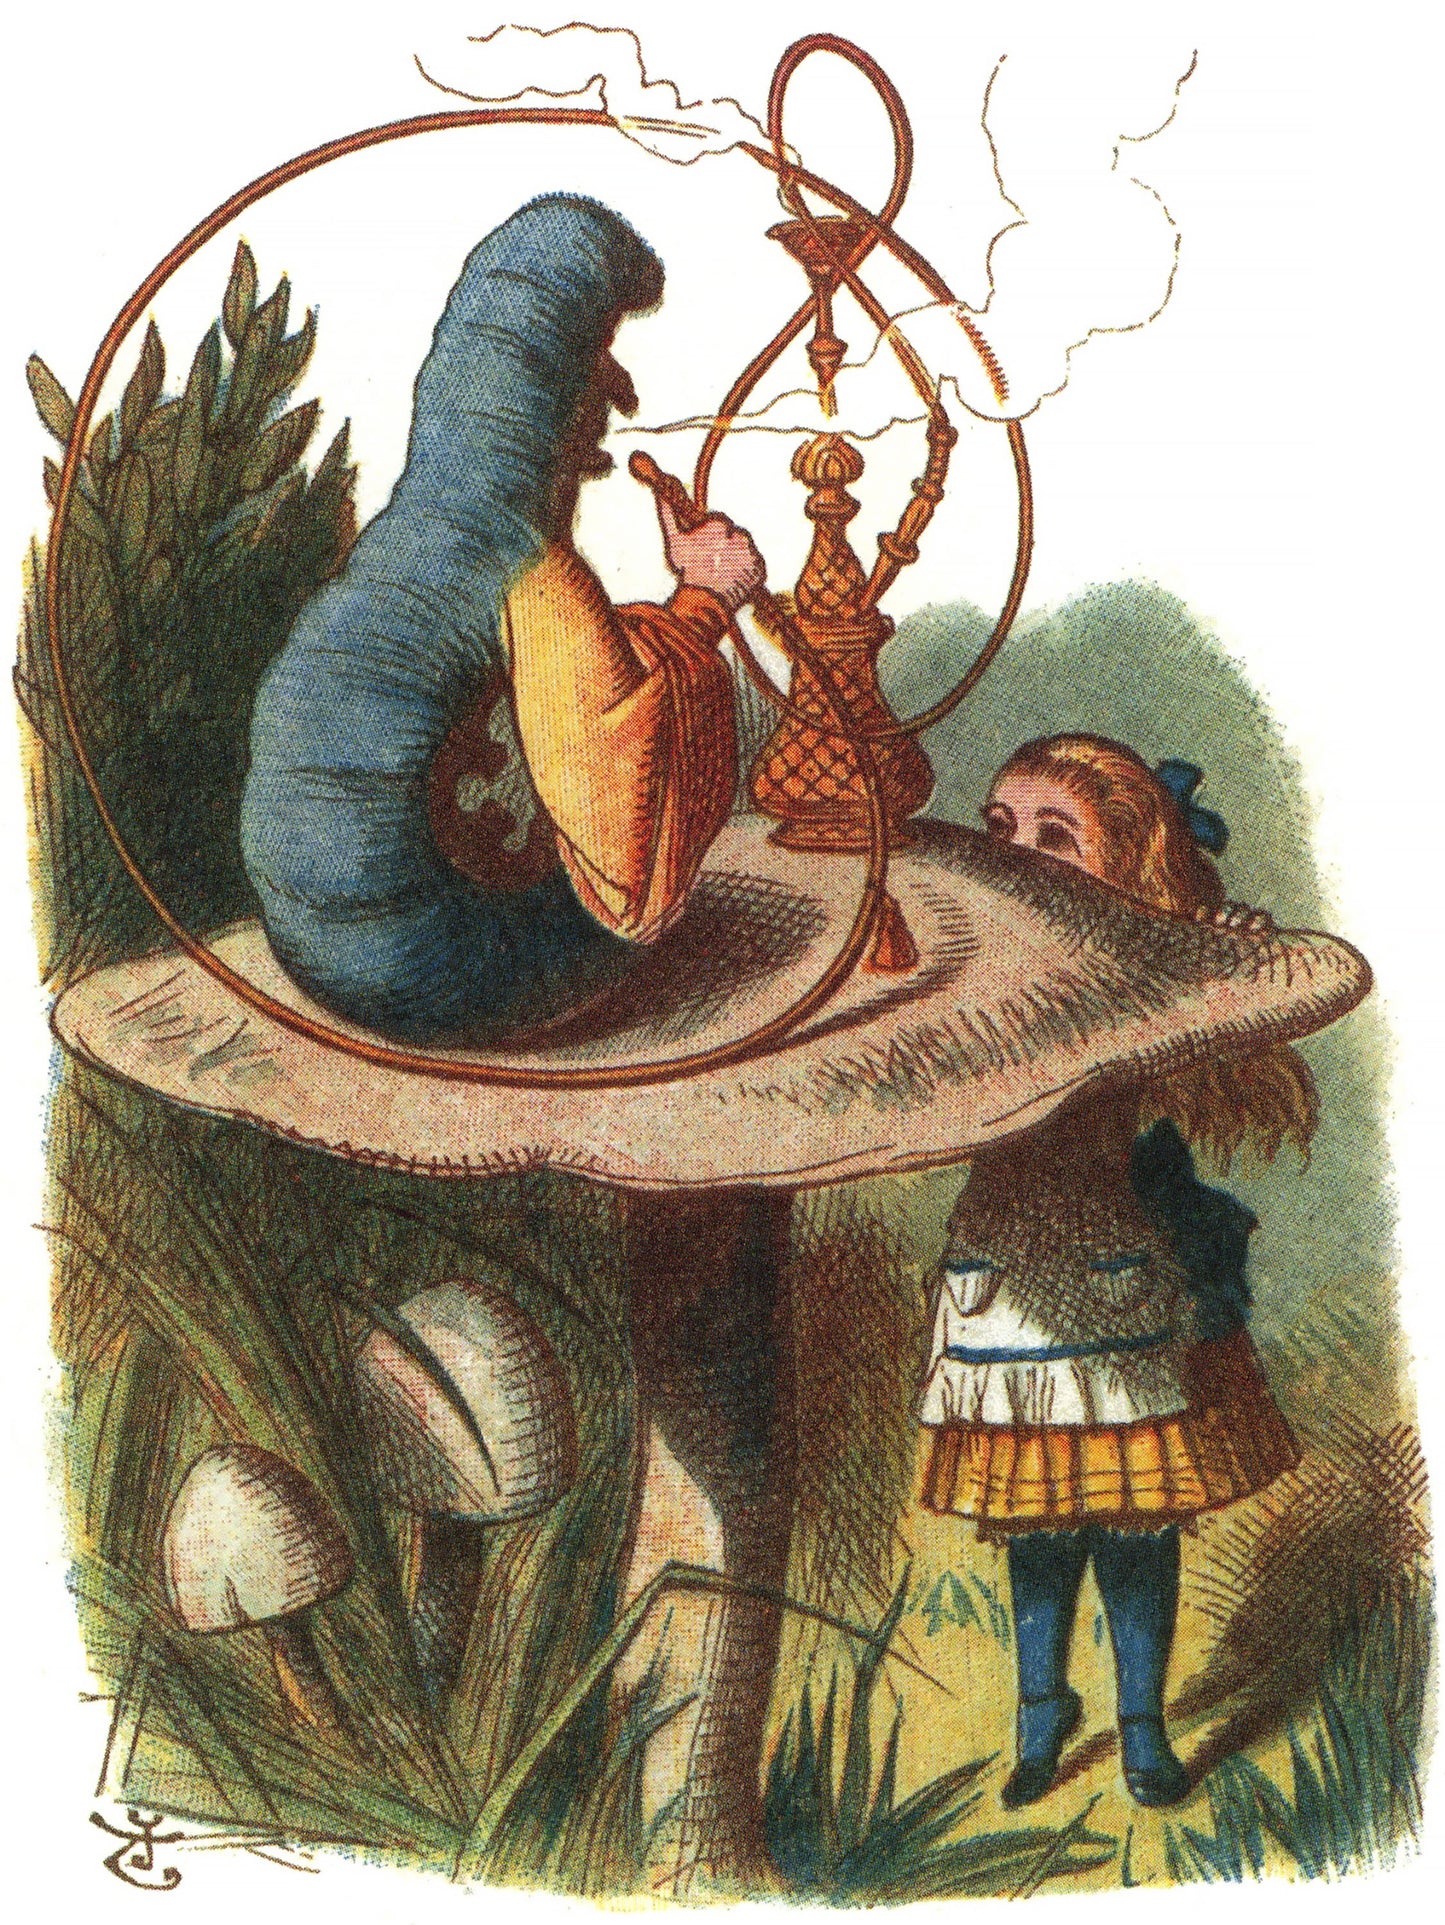 Alice in Wonderland Colored Illustrations [20 Images]